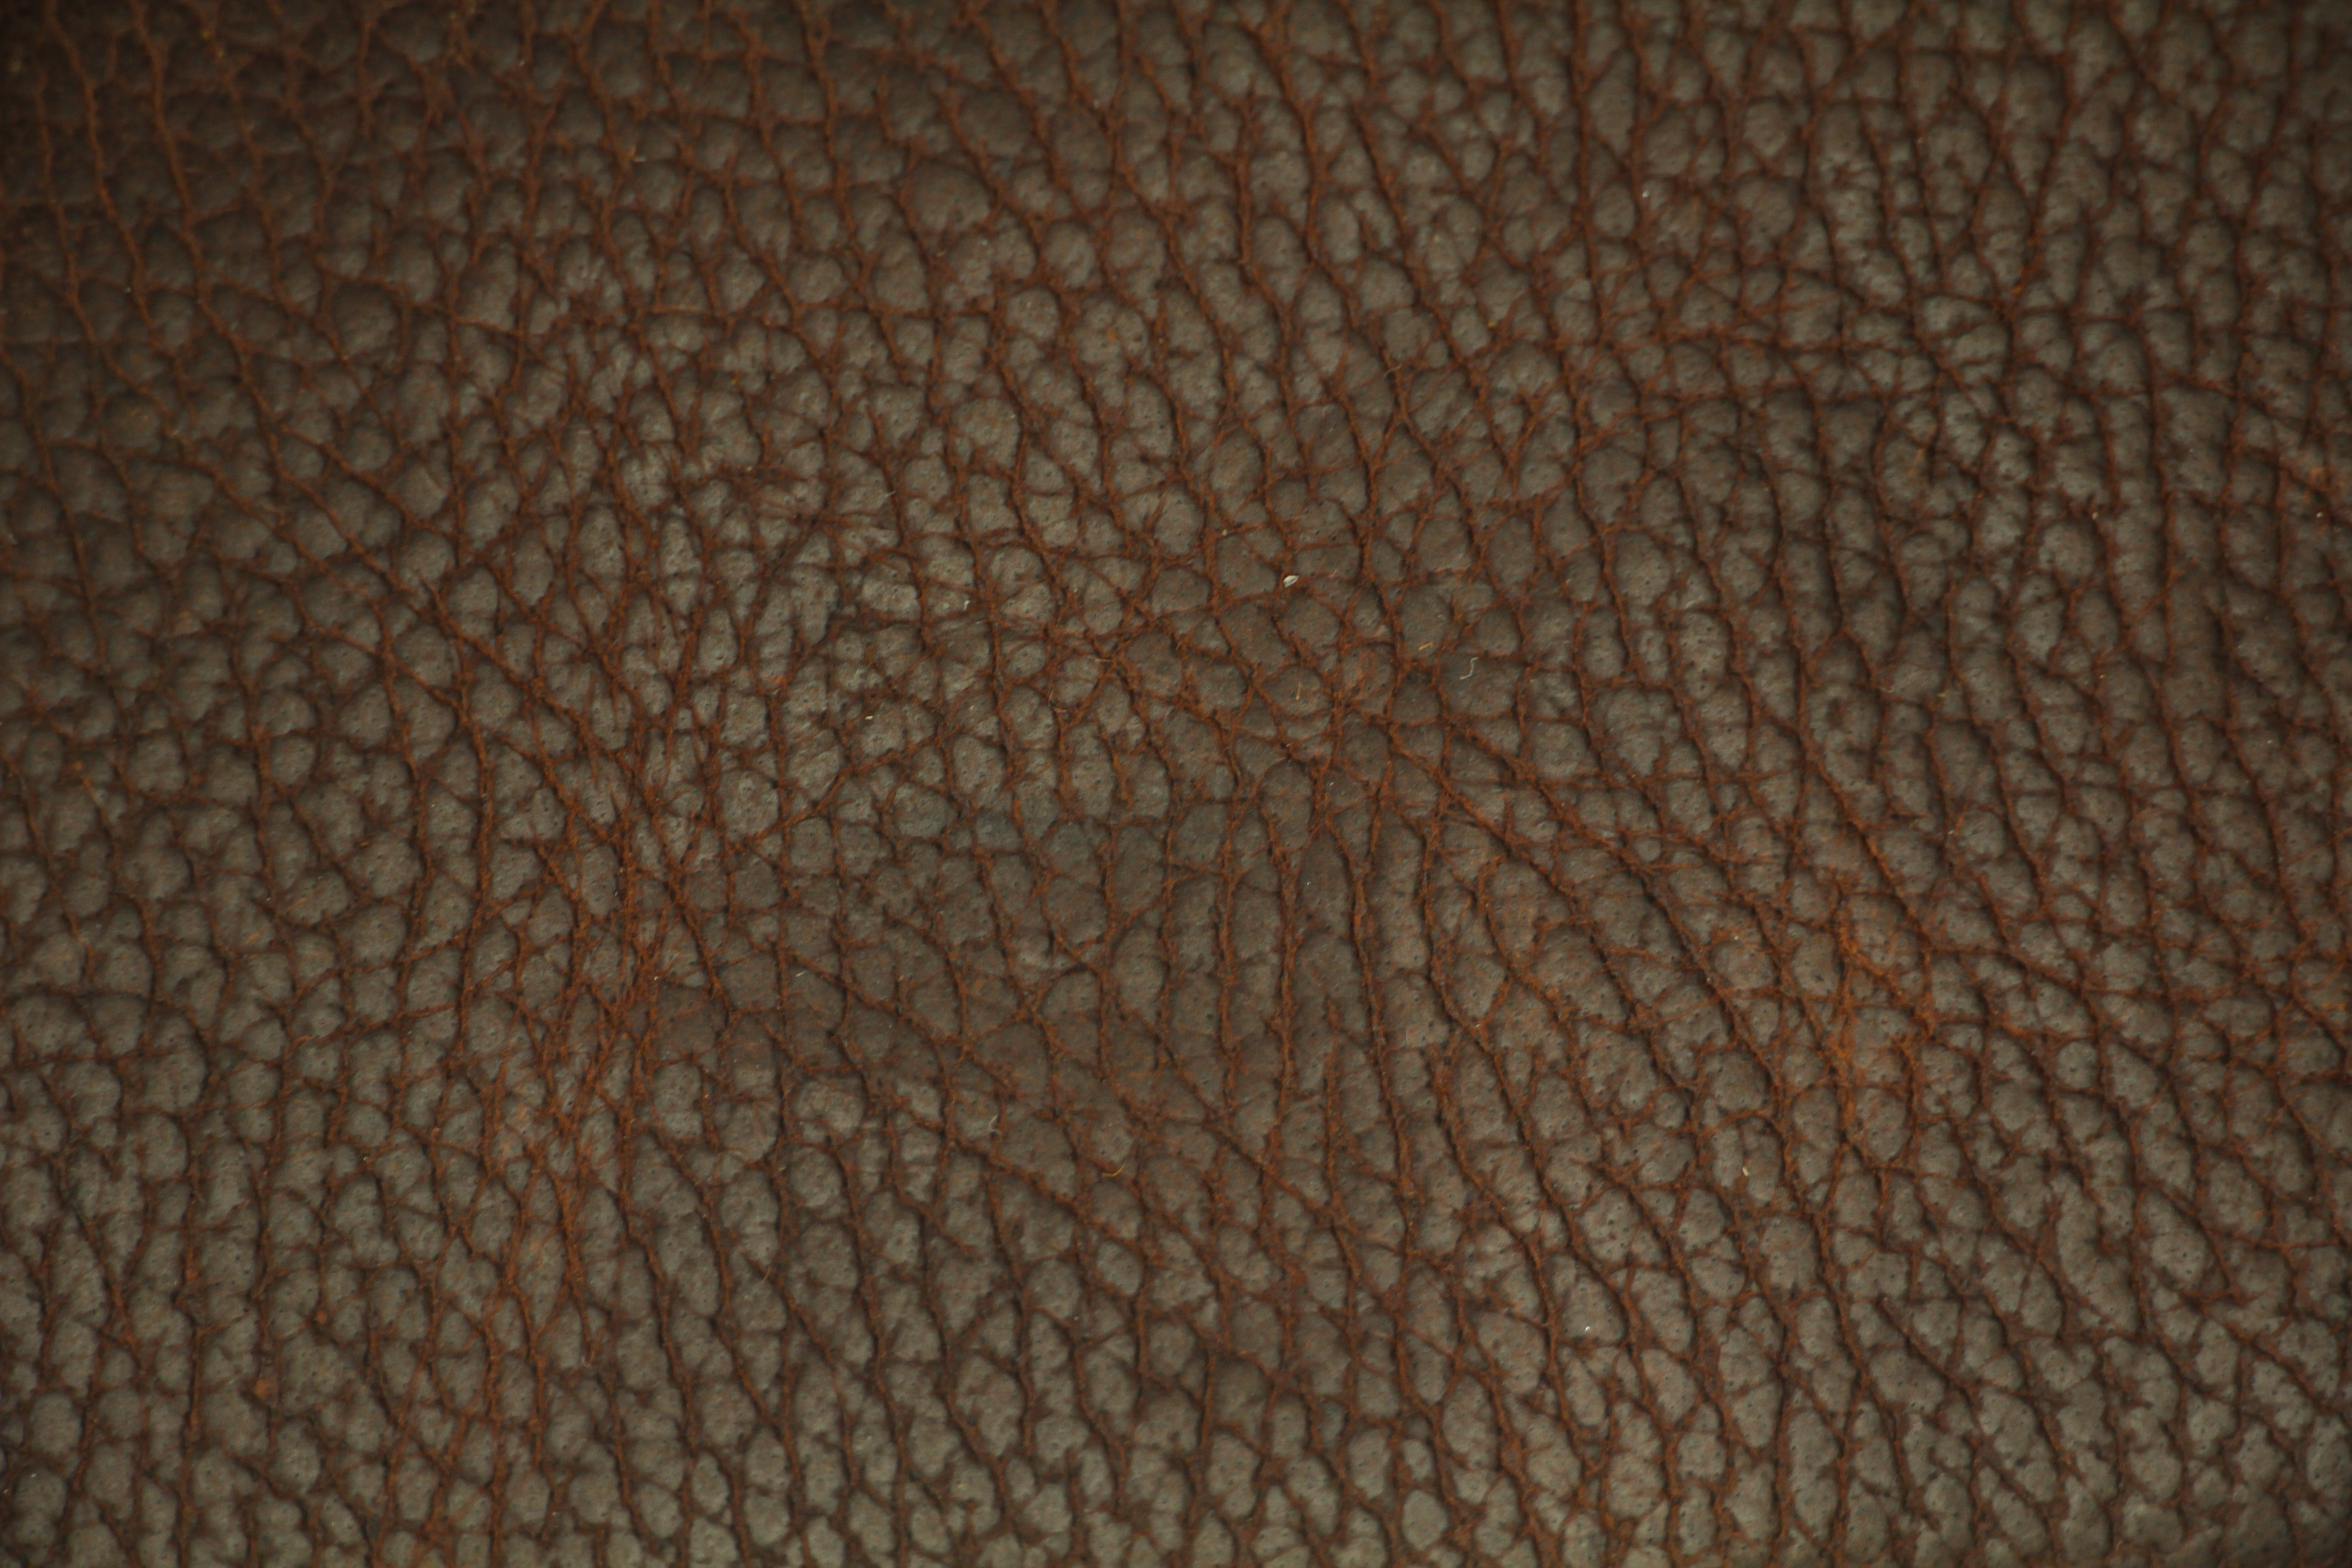 leather texture cow hide genuine hand made pattern photo - TextureX ...